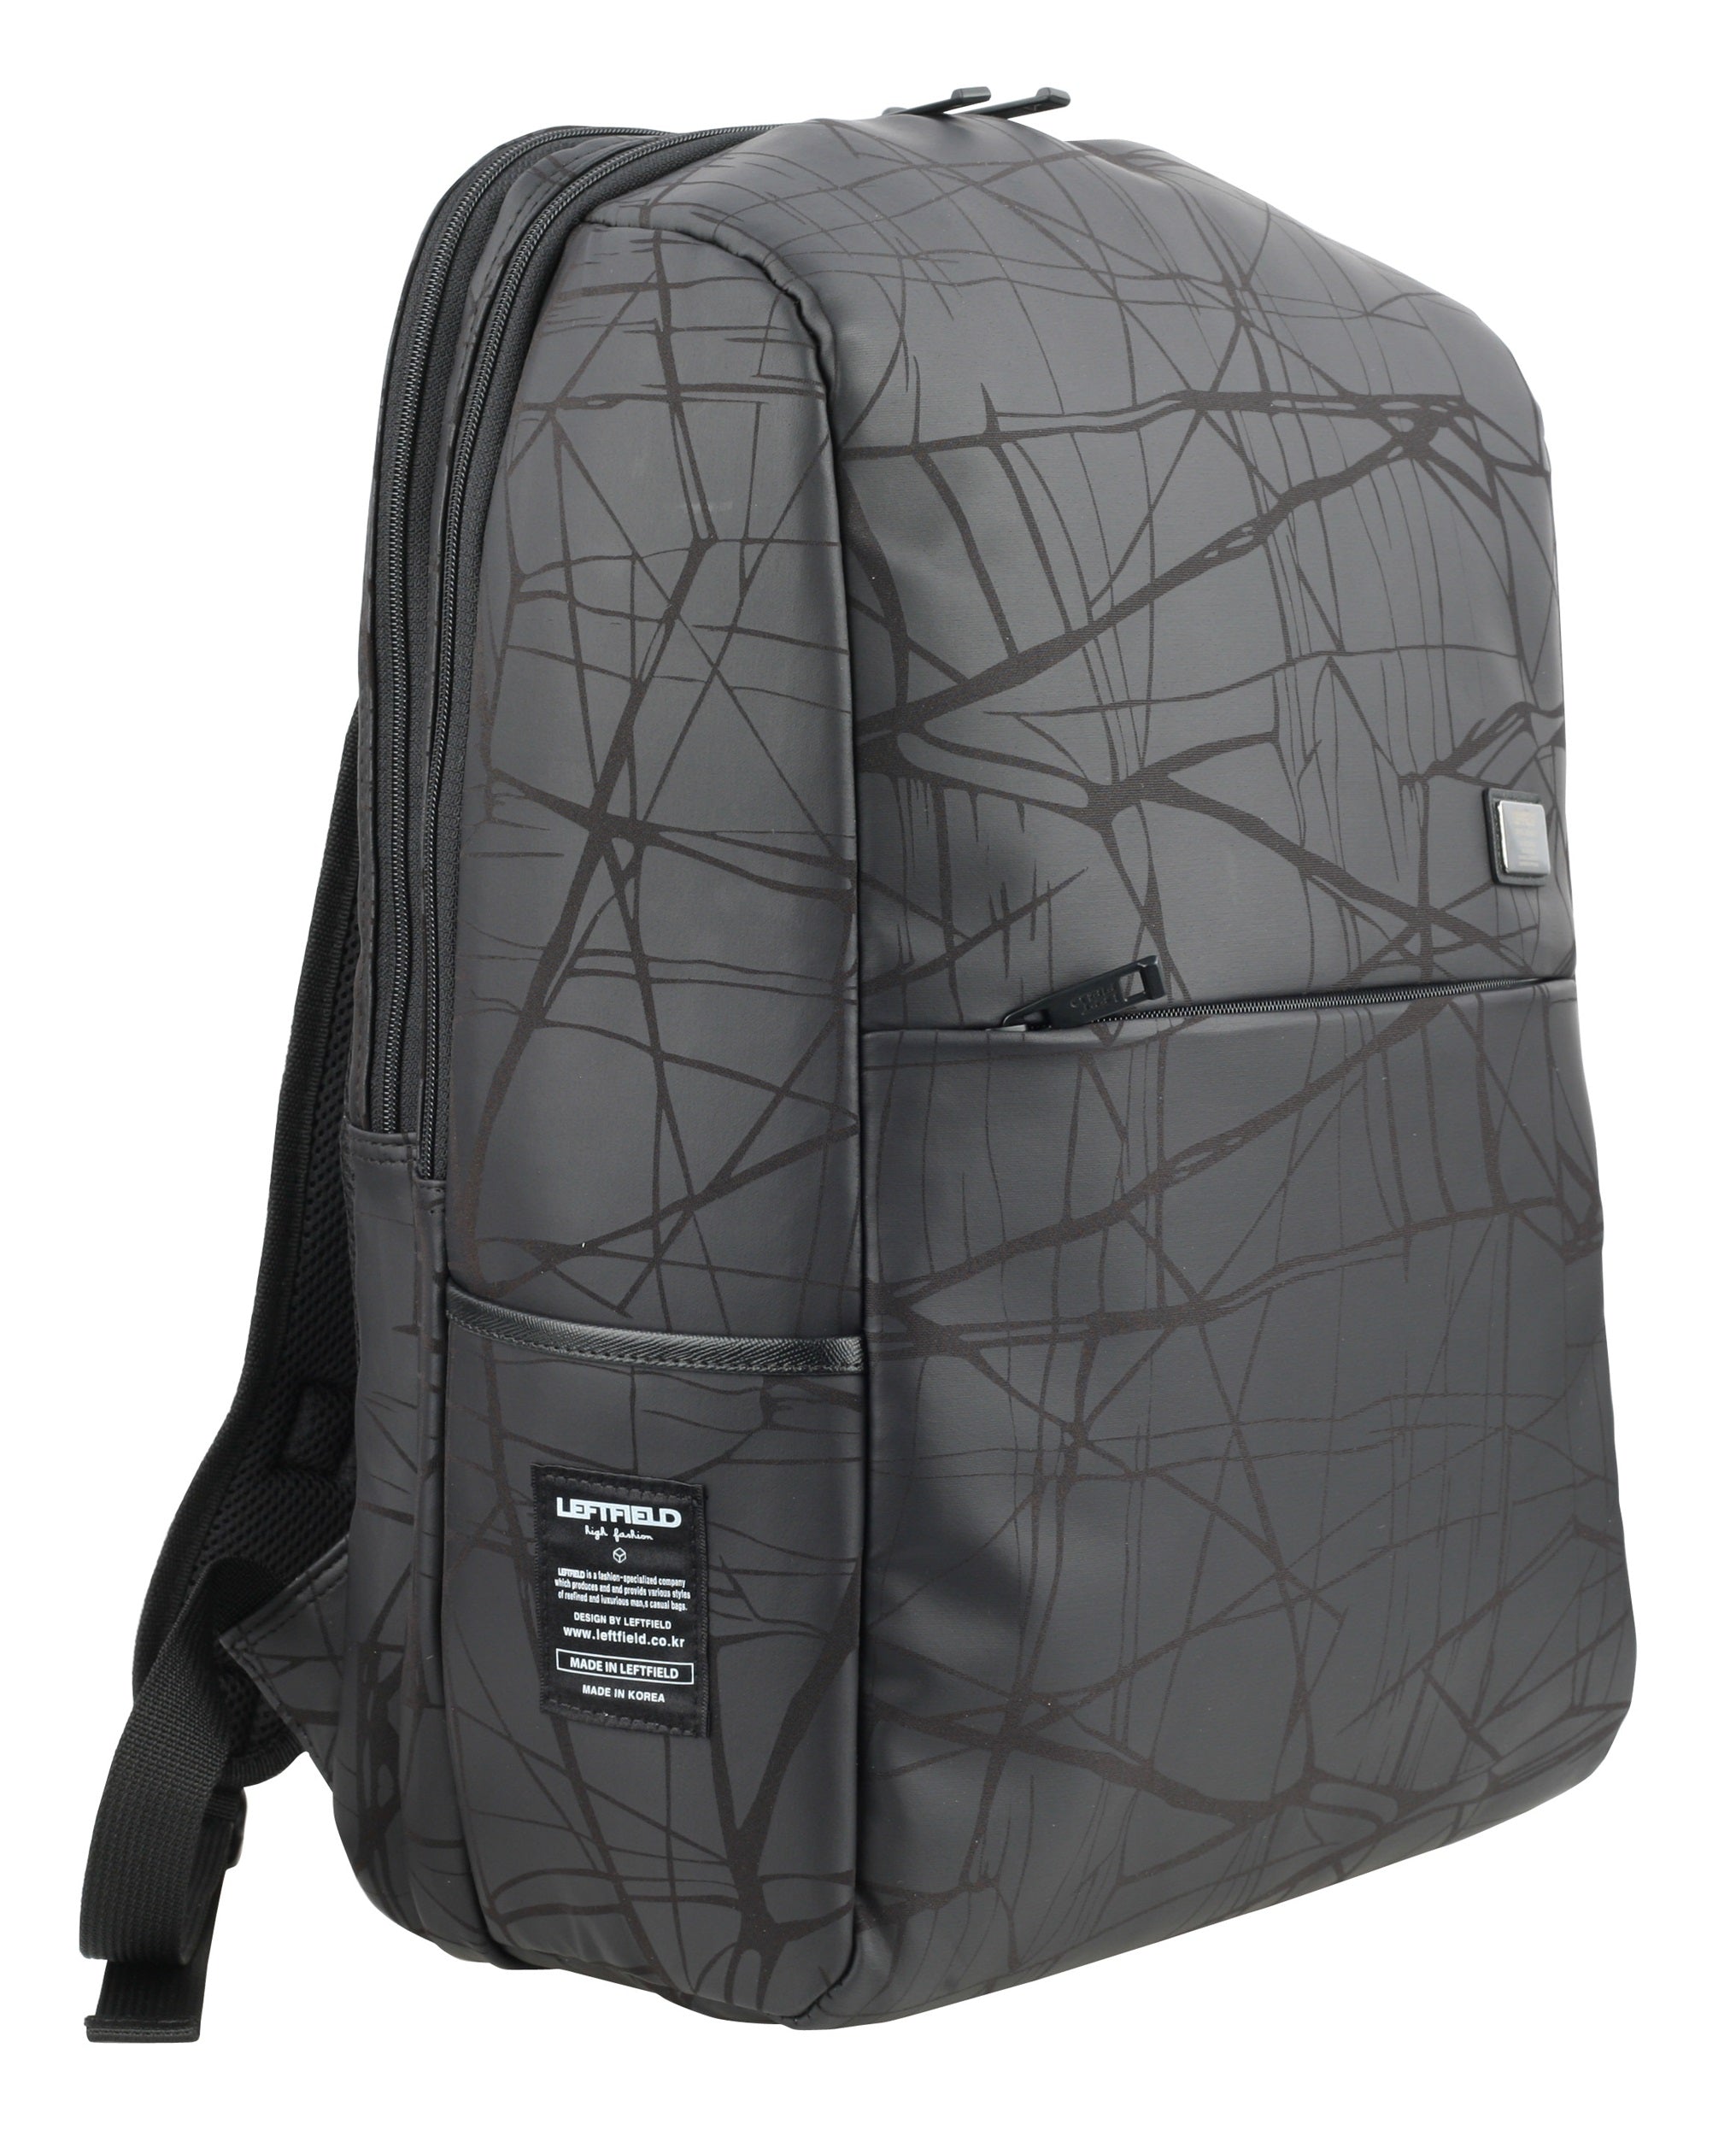 Spider Web Black Faux Leather Backpacks